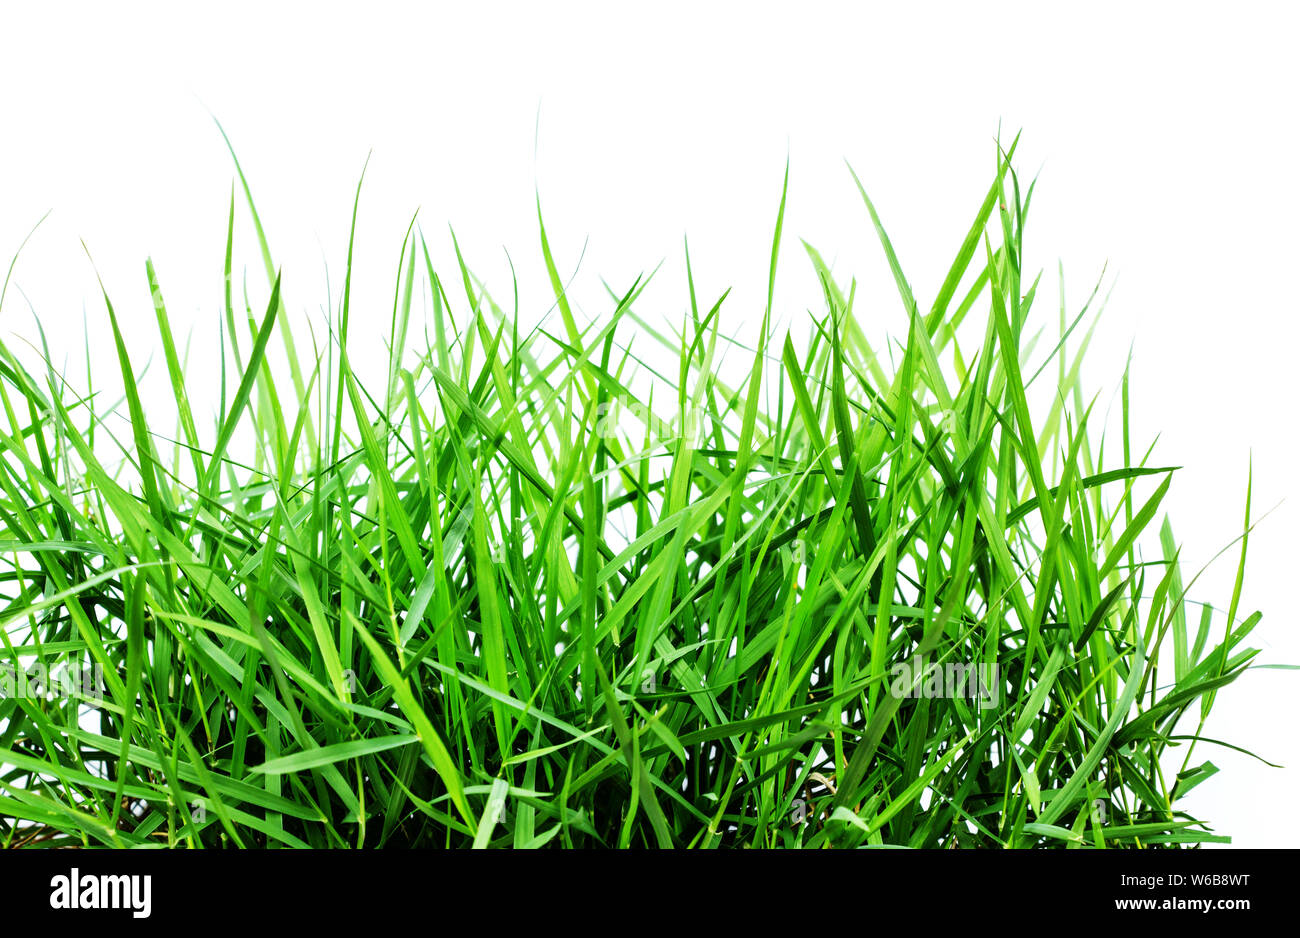 Green grass on white background Stock Photo